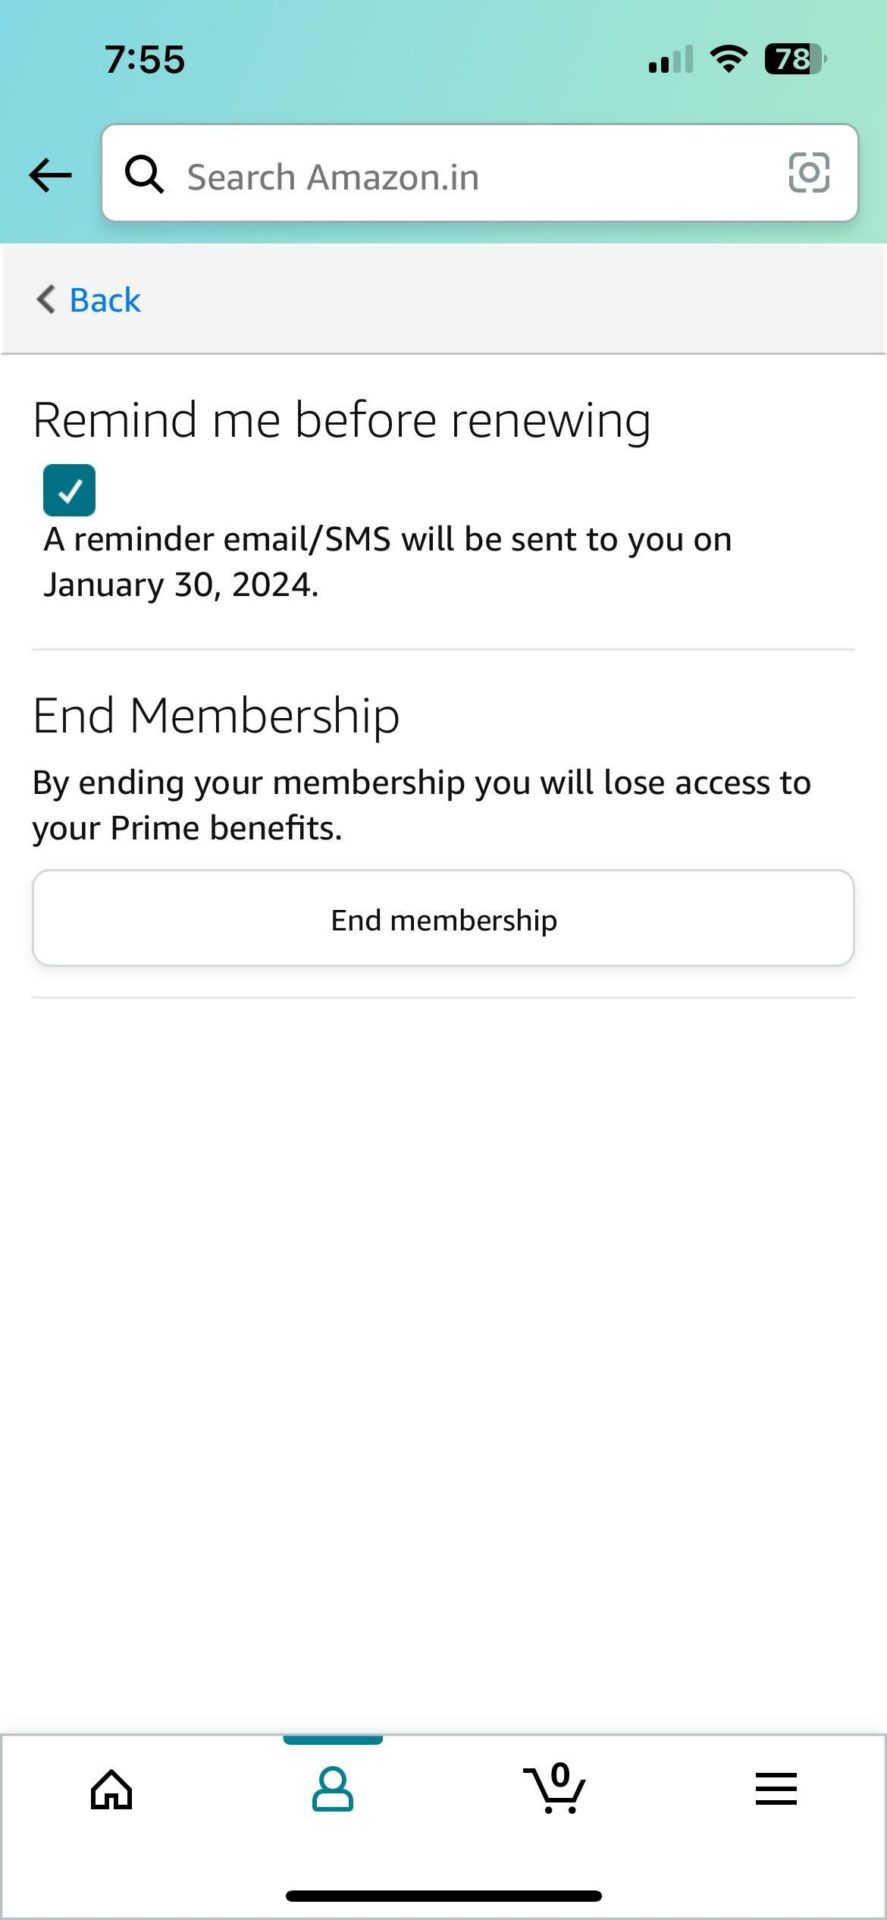 Amazon End Membership